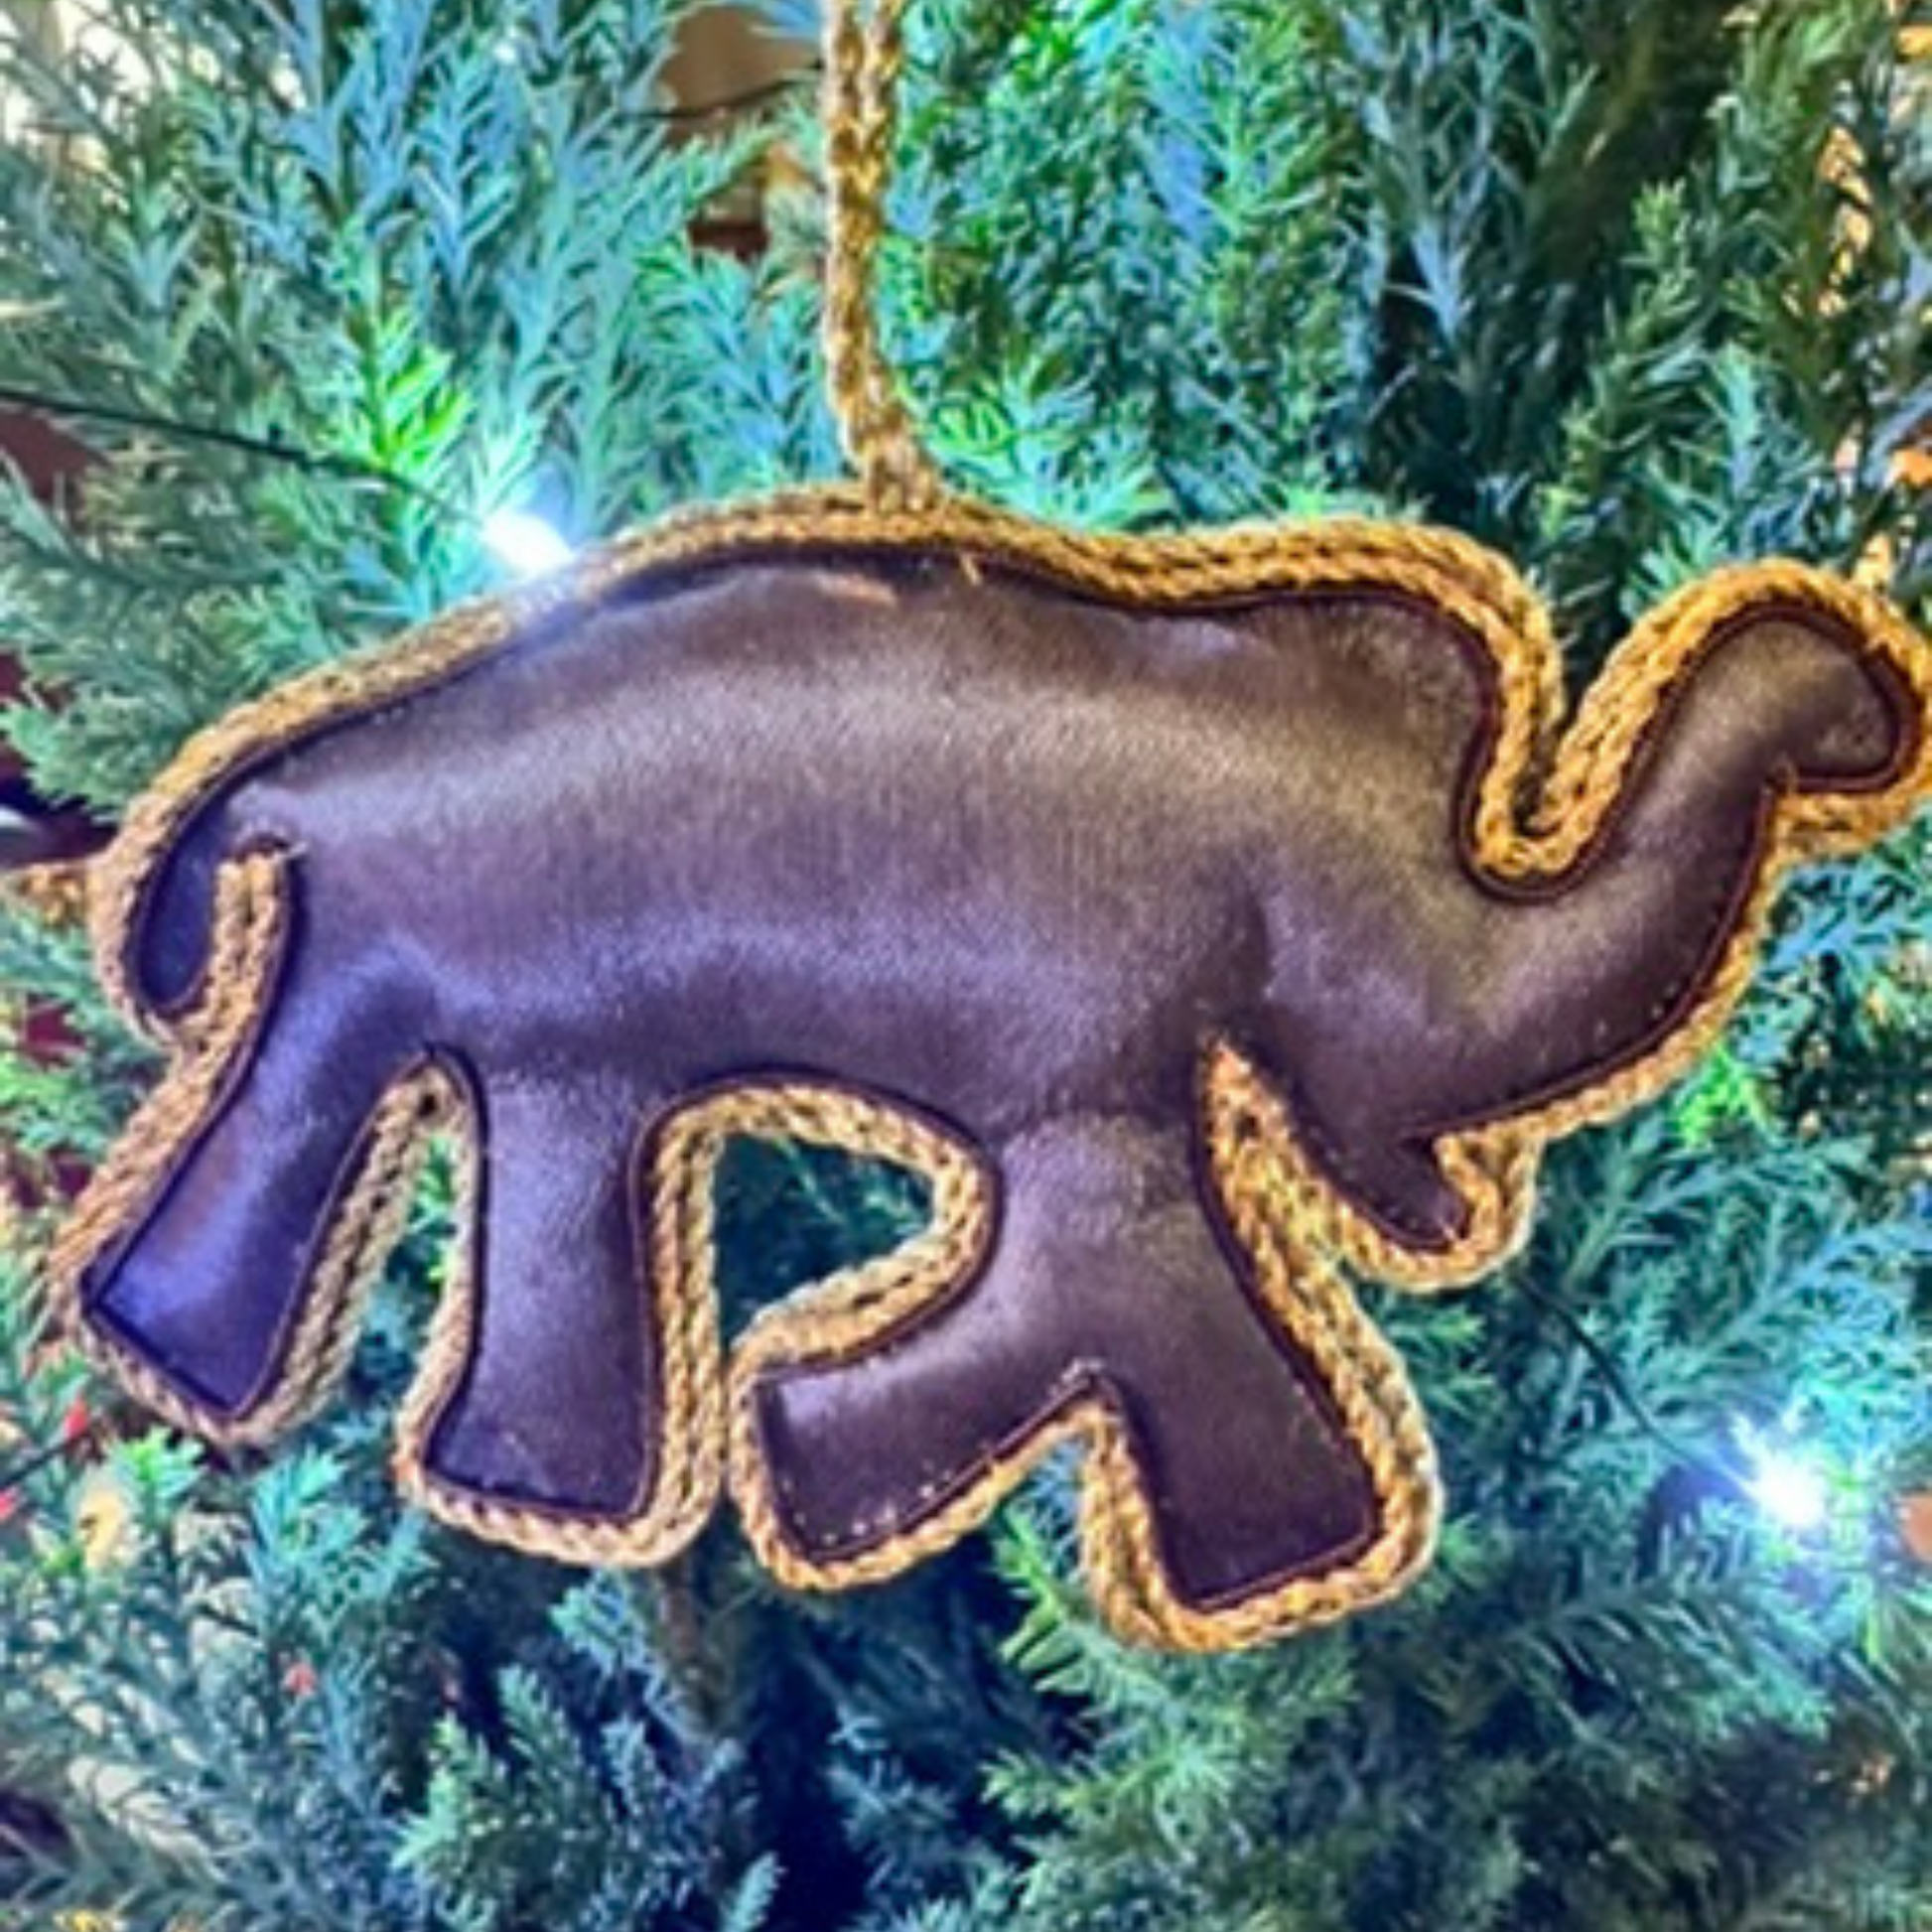 Elephant Christmas Tree Ornament with Zari Embroidery - Tortuna